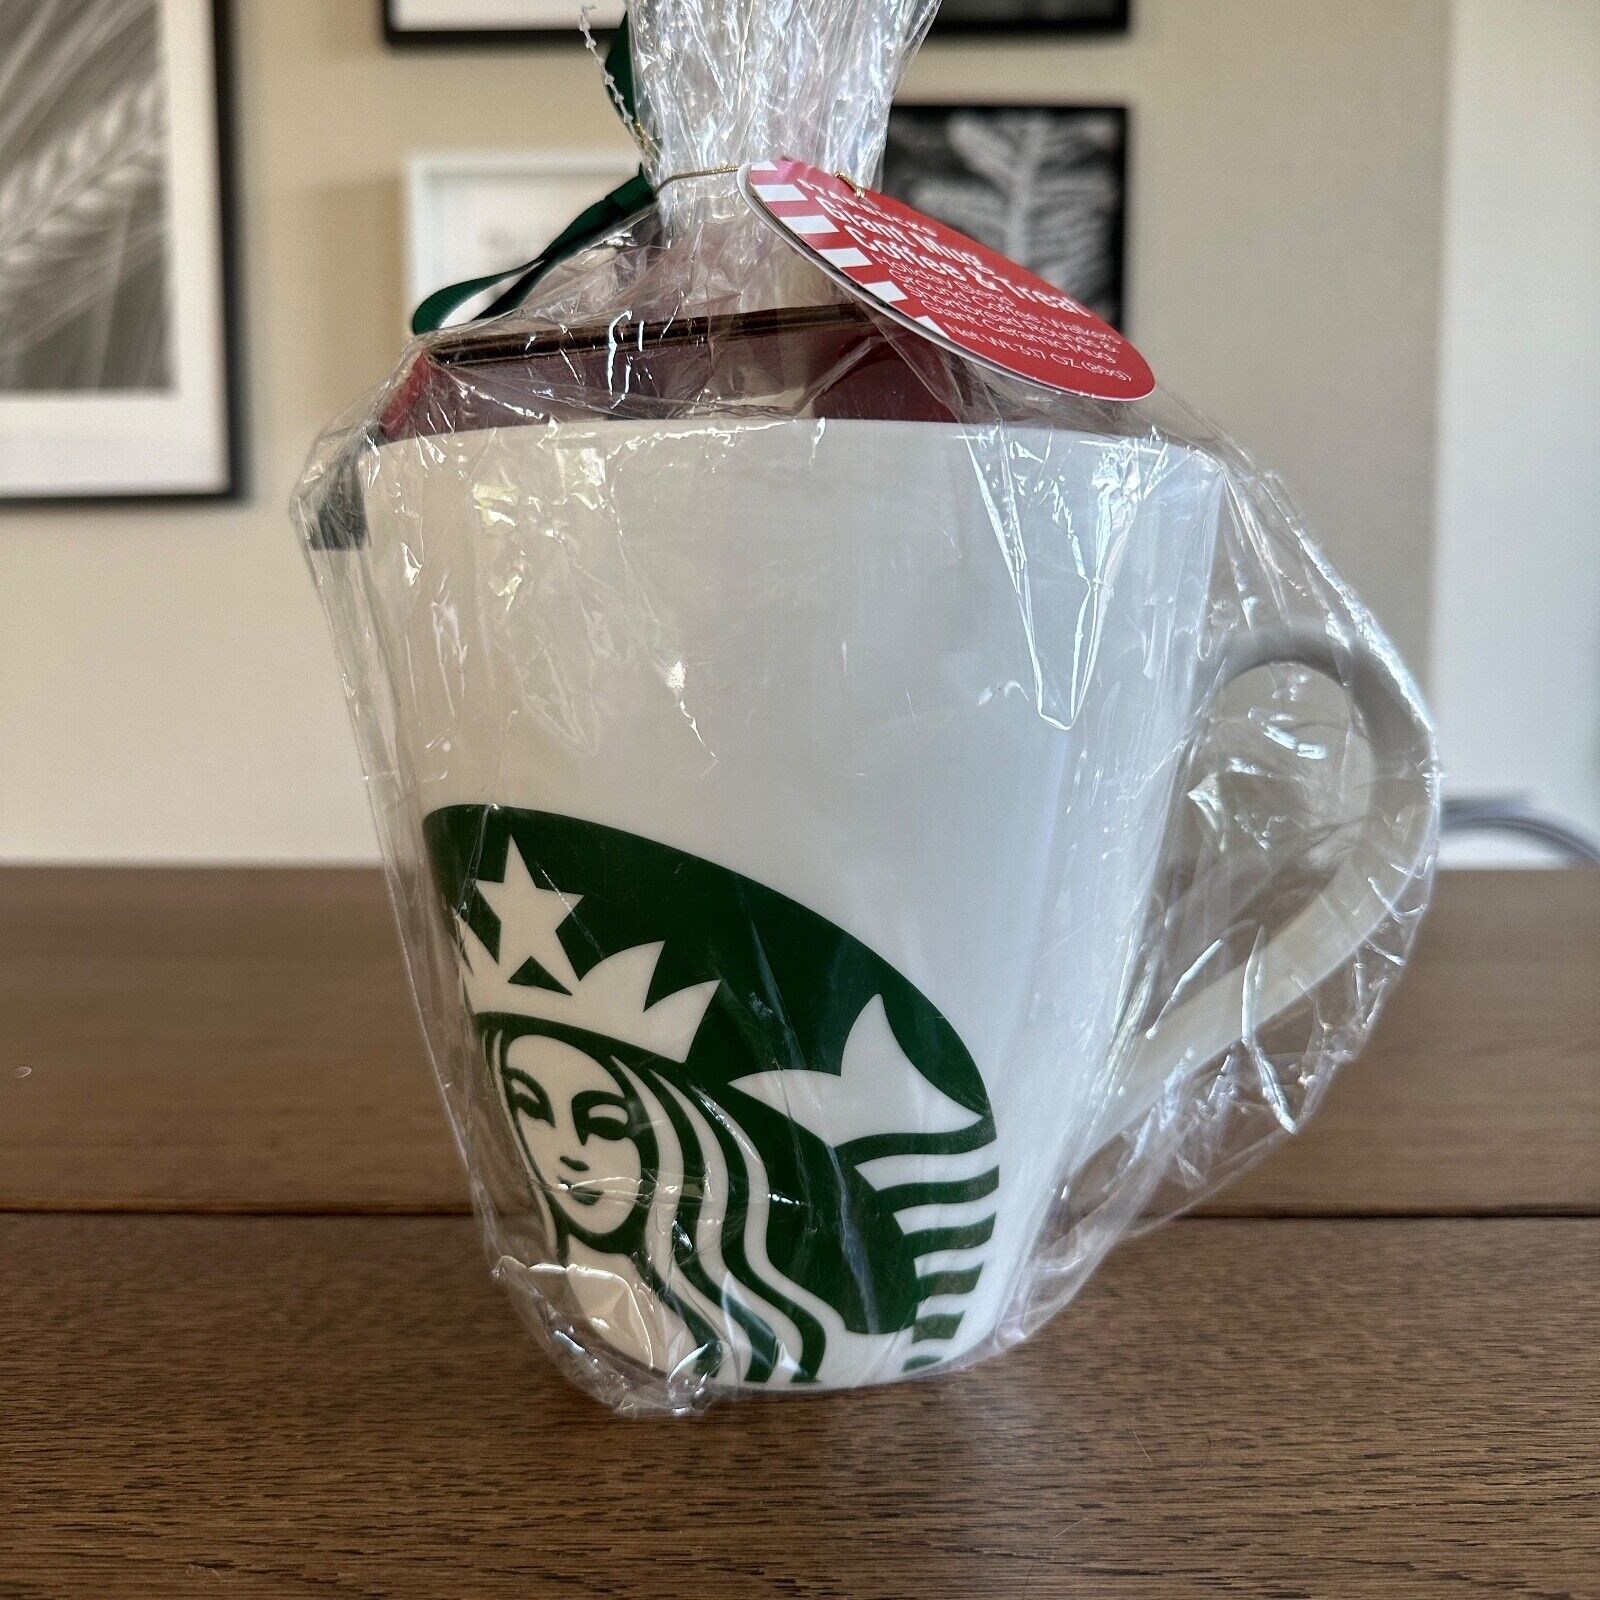 NEW 2019 Starbucks Giant 45 fl oz /1325 ml  Collectable Coffee Mug Only (B1)